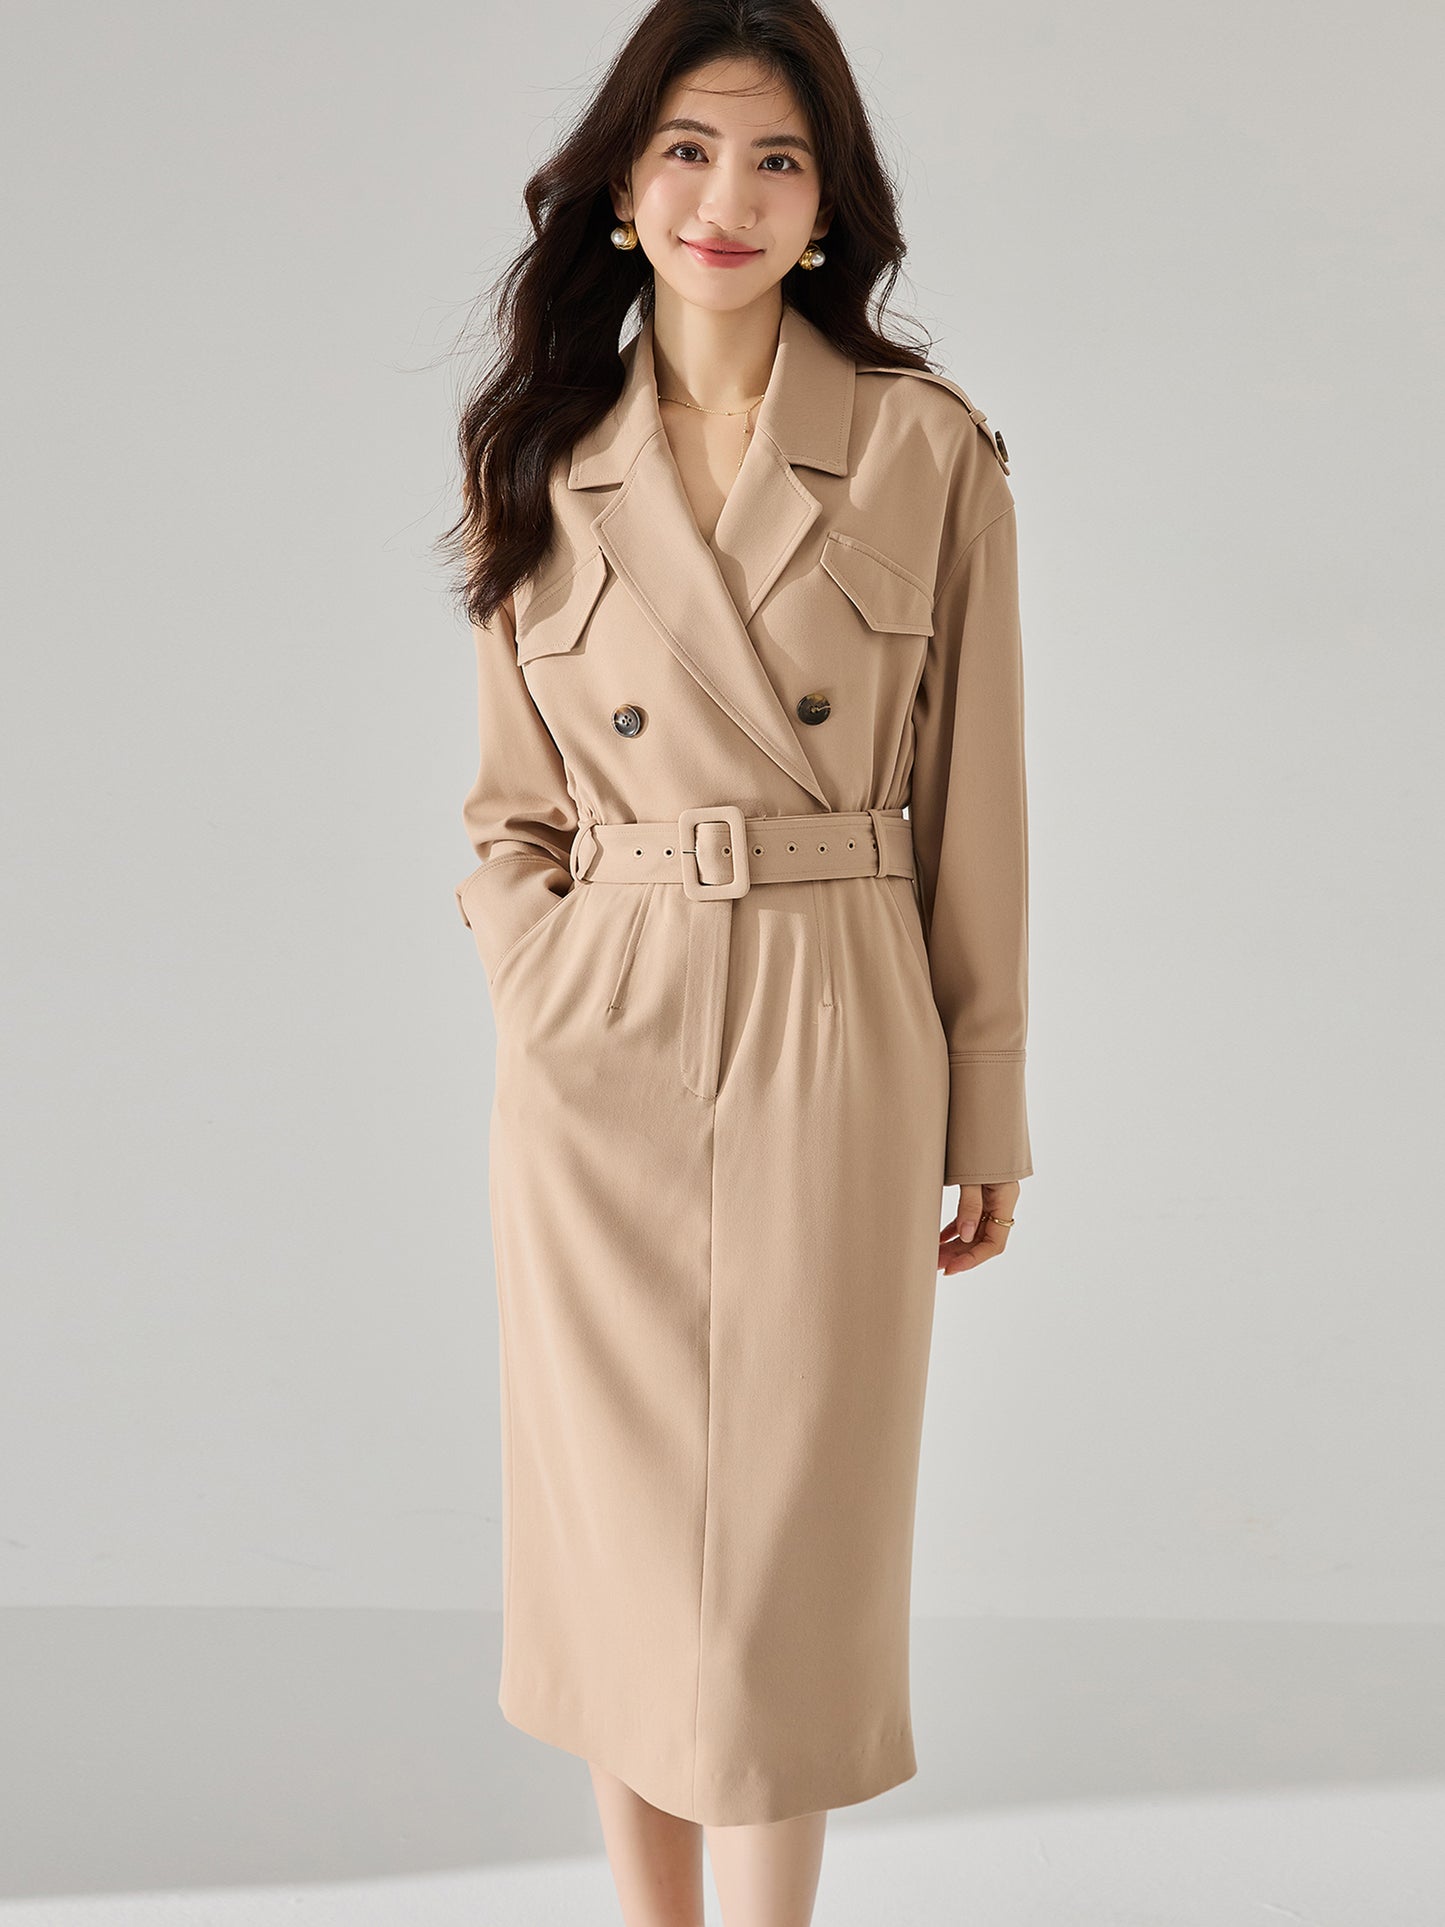 【C&M】Women's trench coat dresses